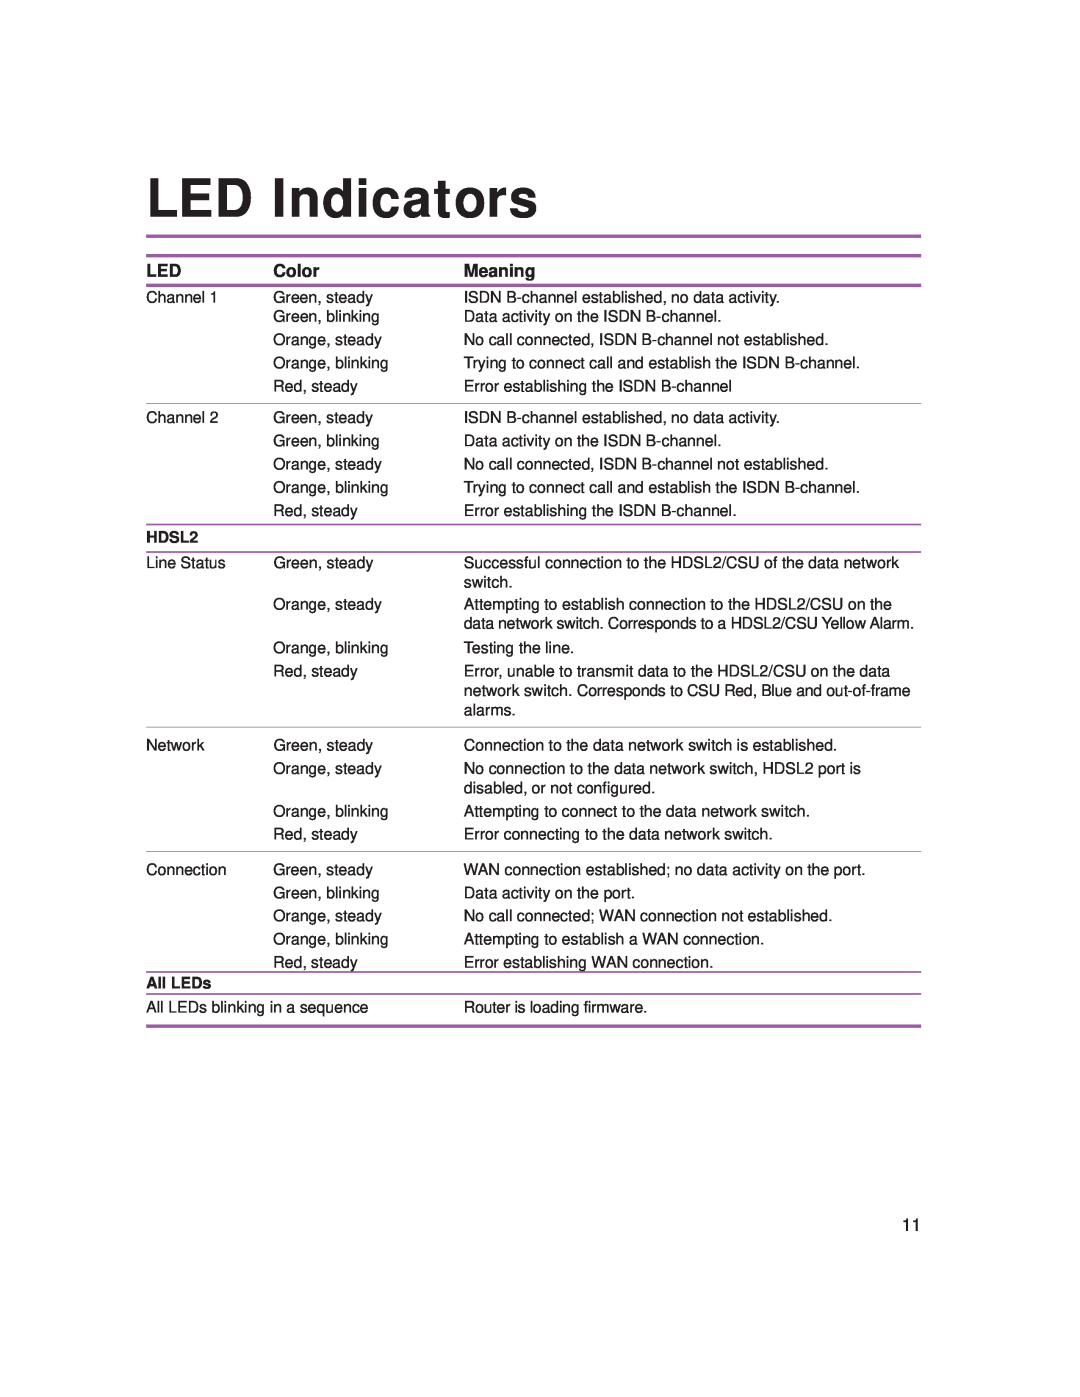 Intel 9545 quick start LED Indicators, HDSL2, All LEDs 